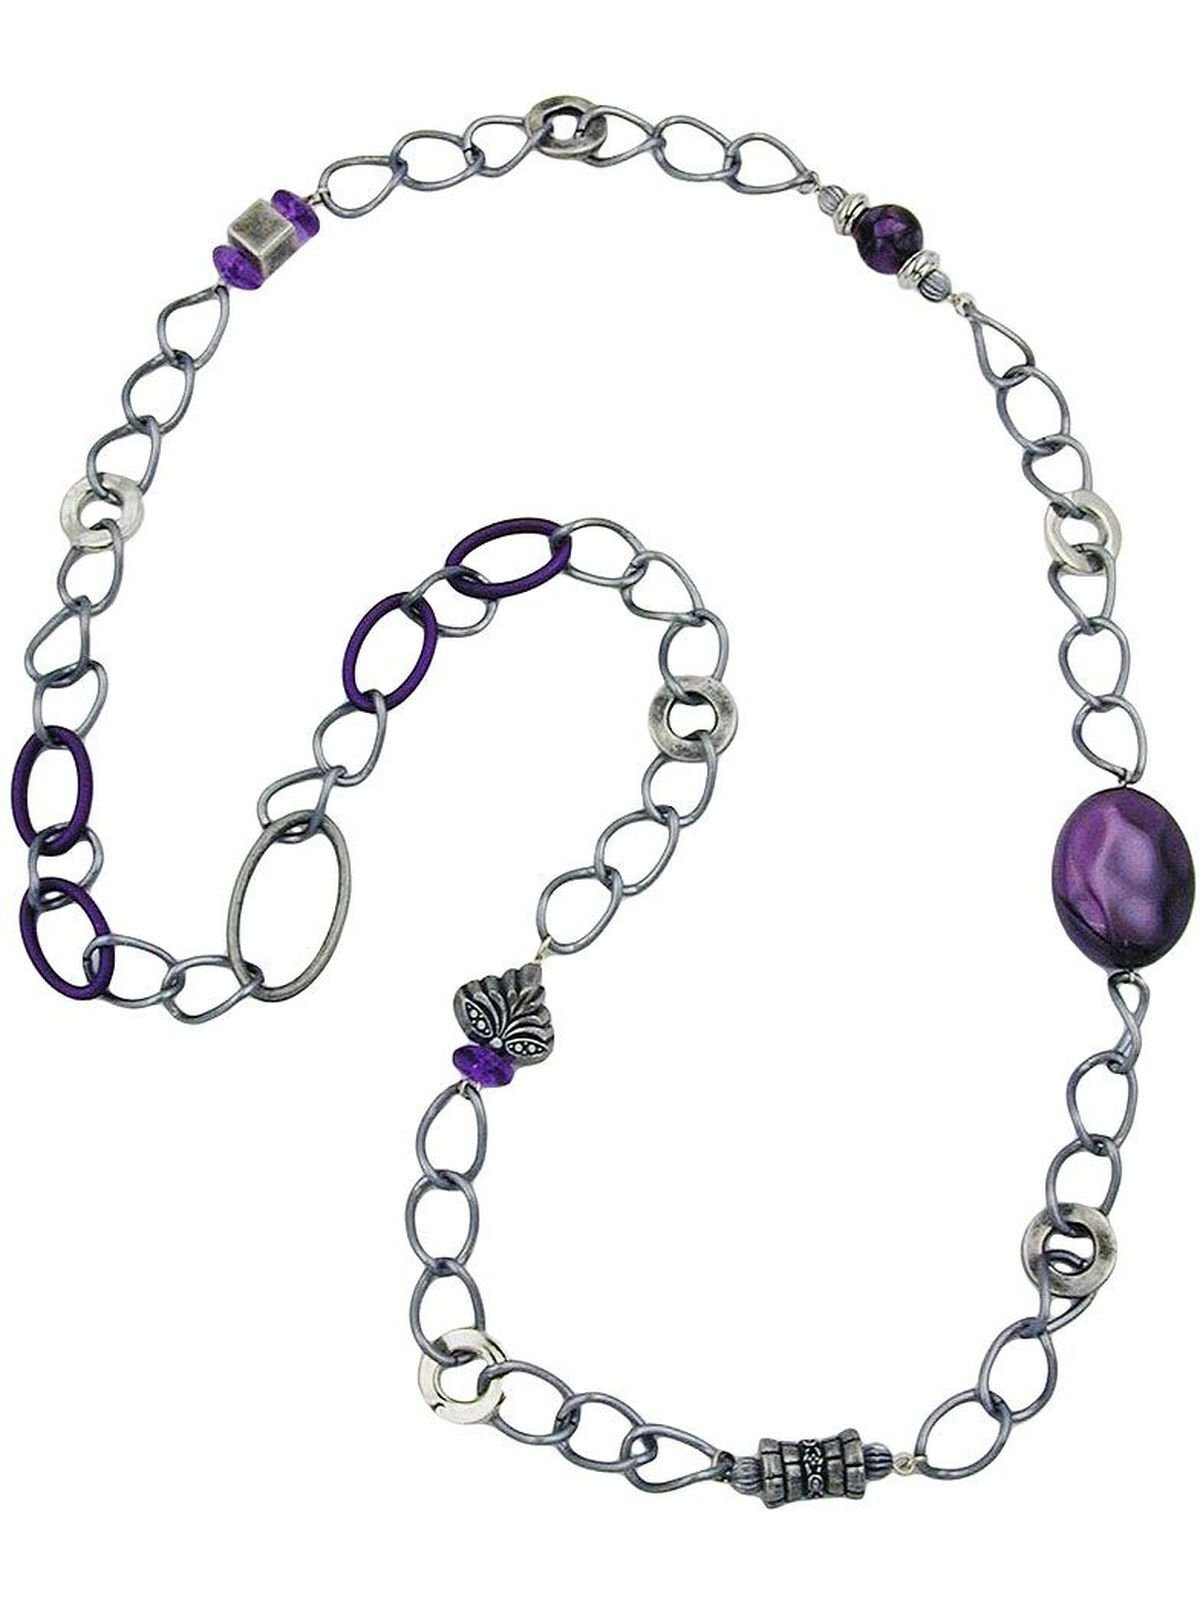 Gallay Perlenkette Kunststoffperlen lila-altsilberfarbene Weitpanzerkette Aluminium dunkelgrau 95cm